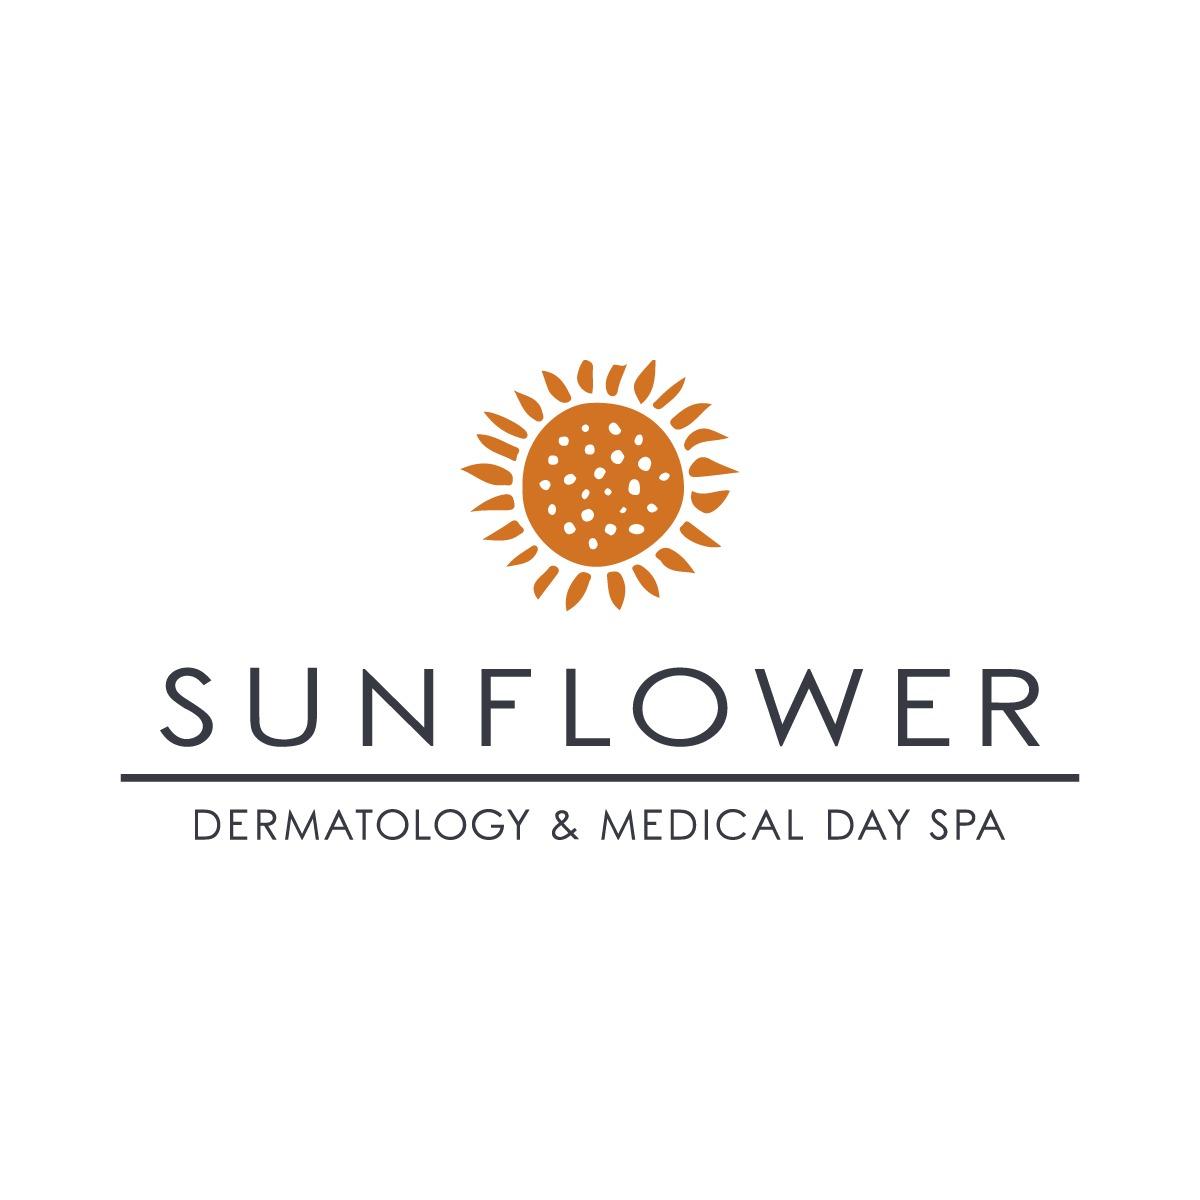 Sunflower Dermatology & Medical Day Spay Logo